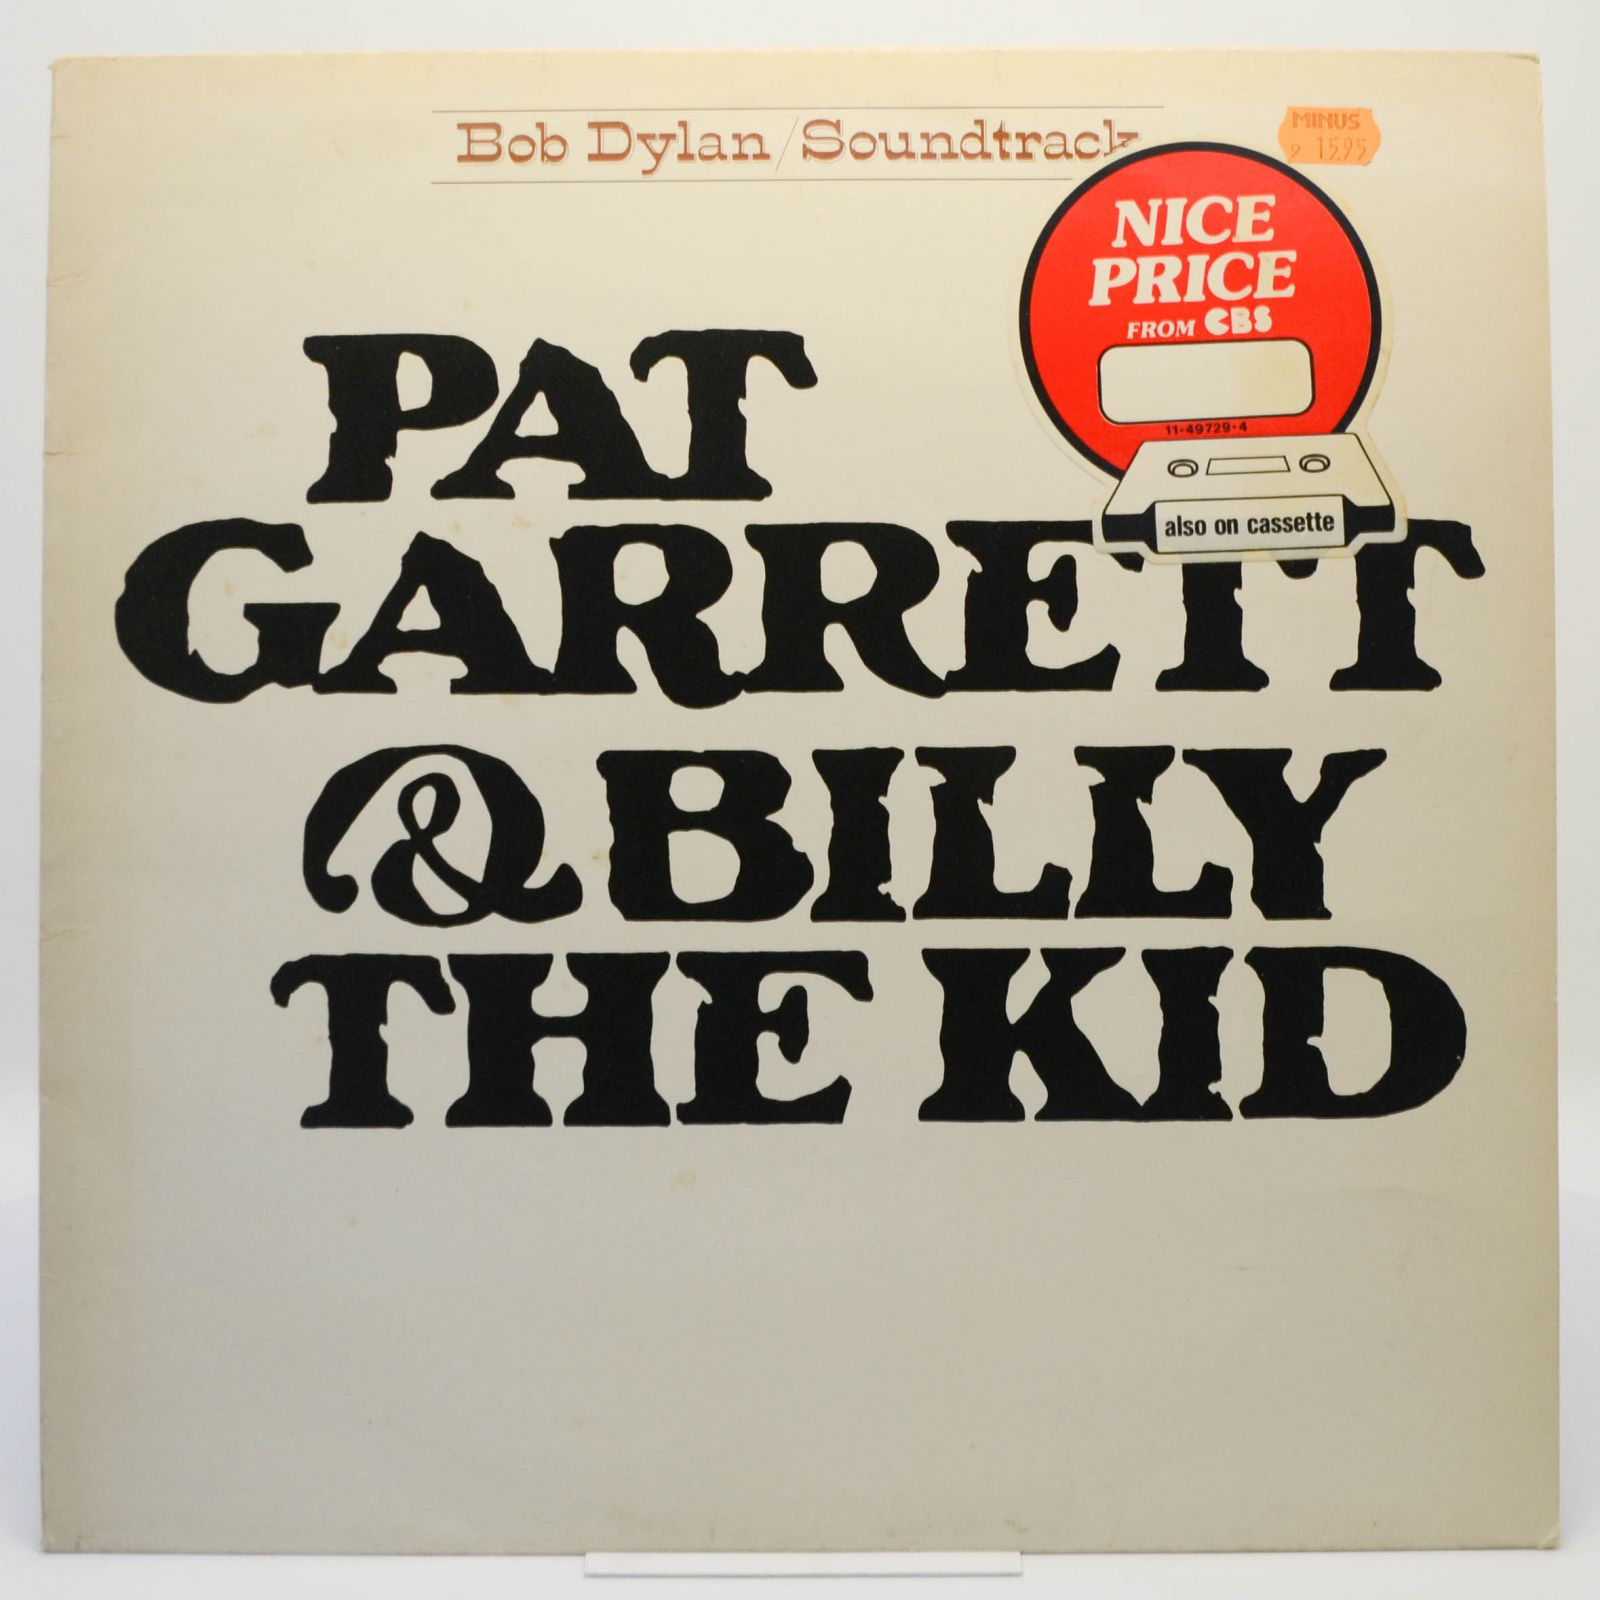 Pat Garrett & Billy The Kid - Original Soundtrack Recording, 1973